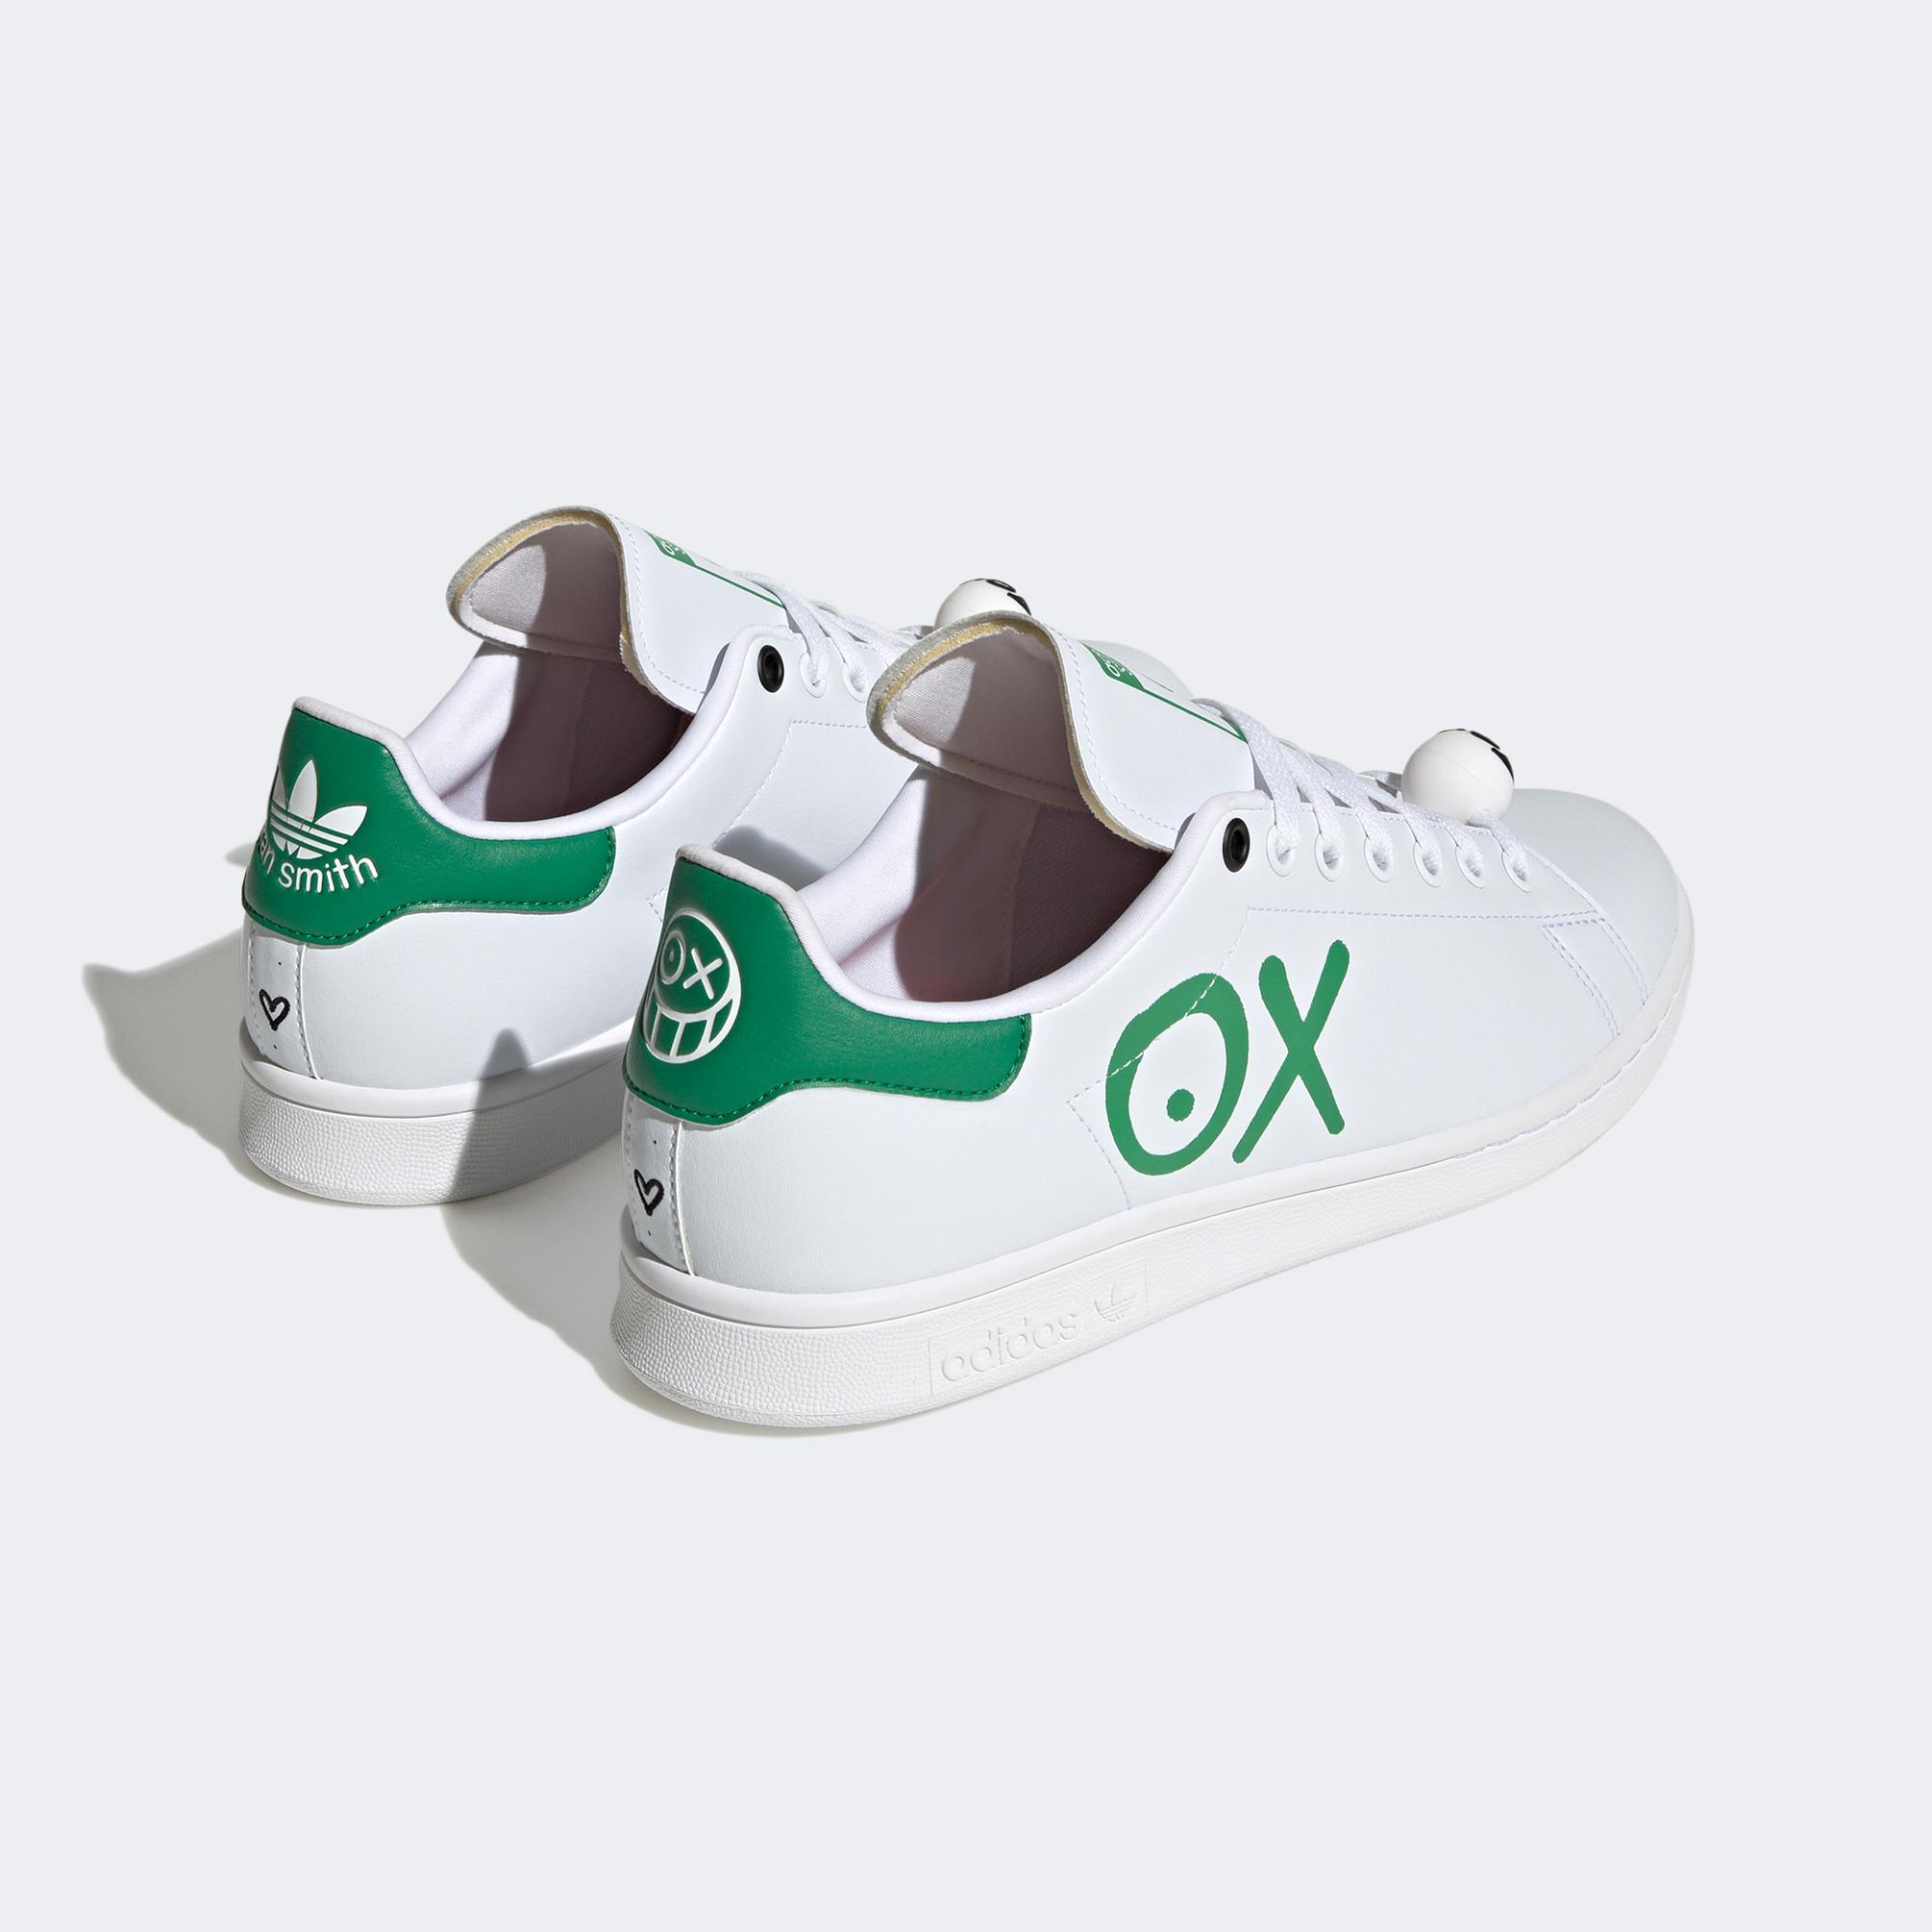  adidas Originals Stan Smith Unisex Beyaz Spor Ayakkabı